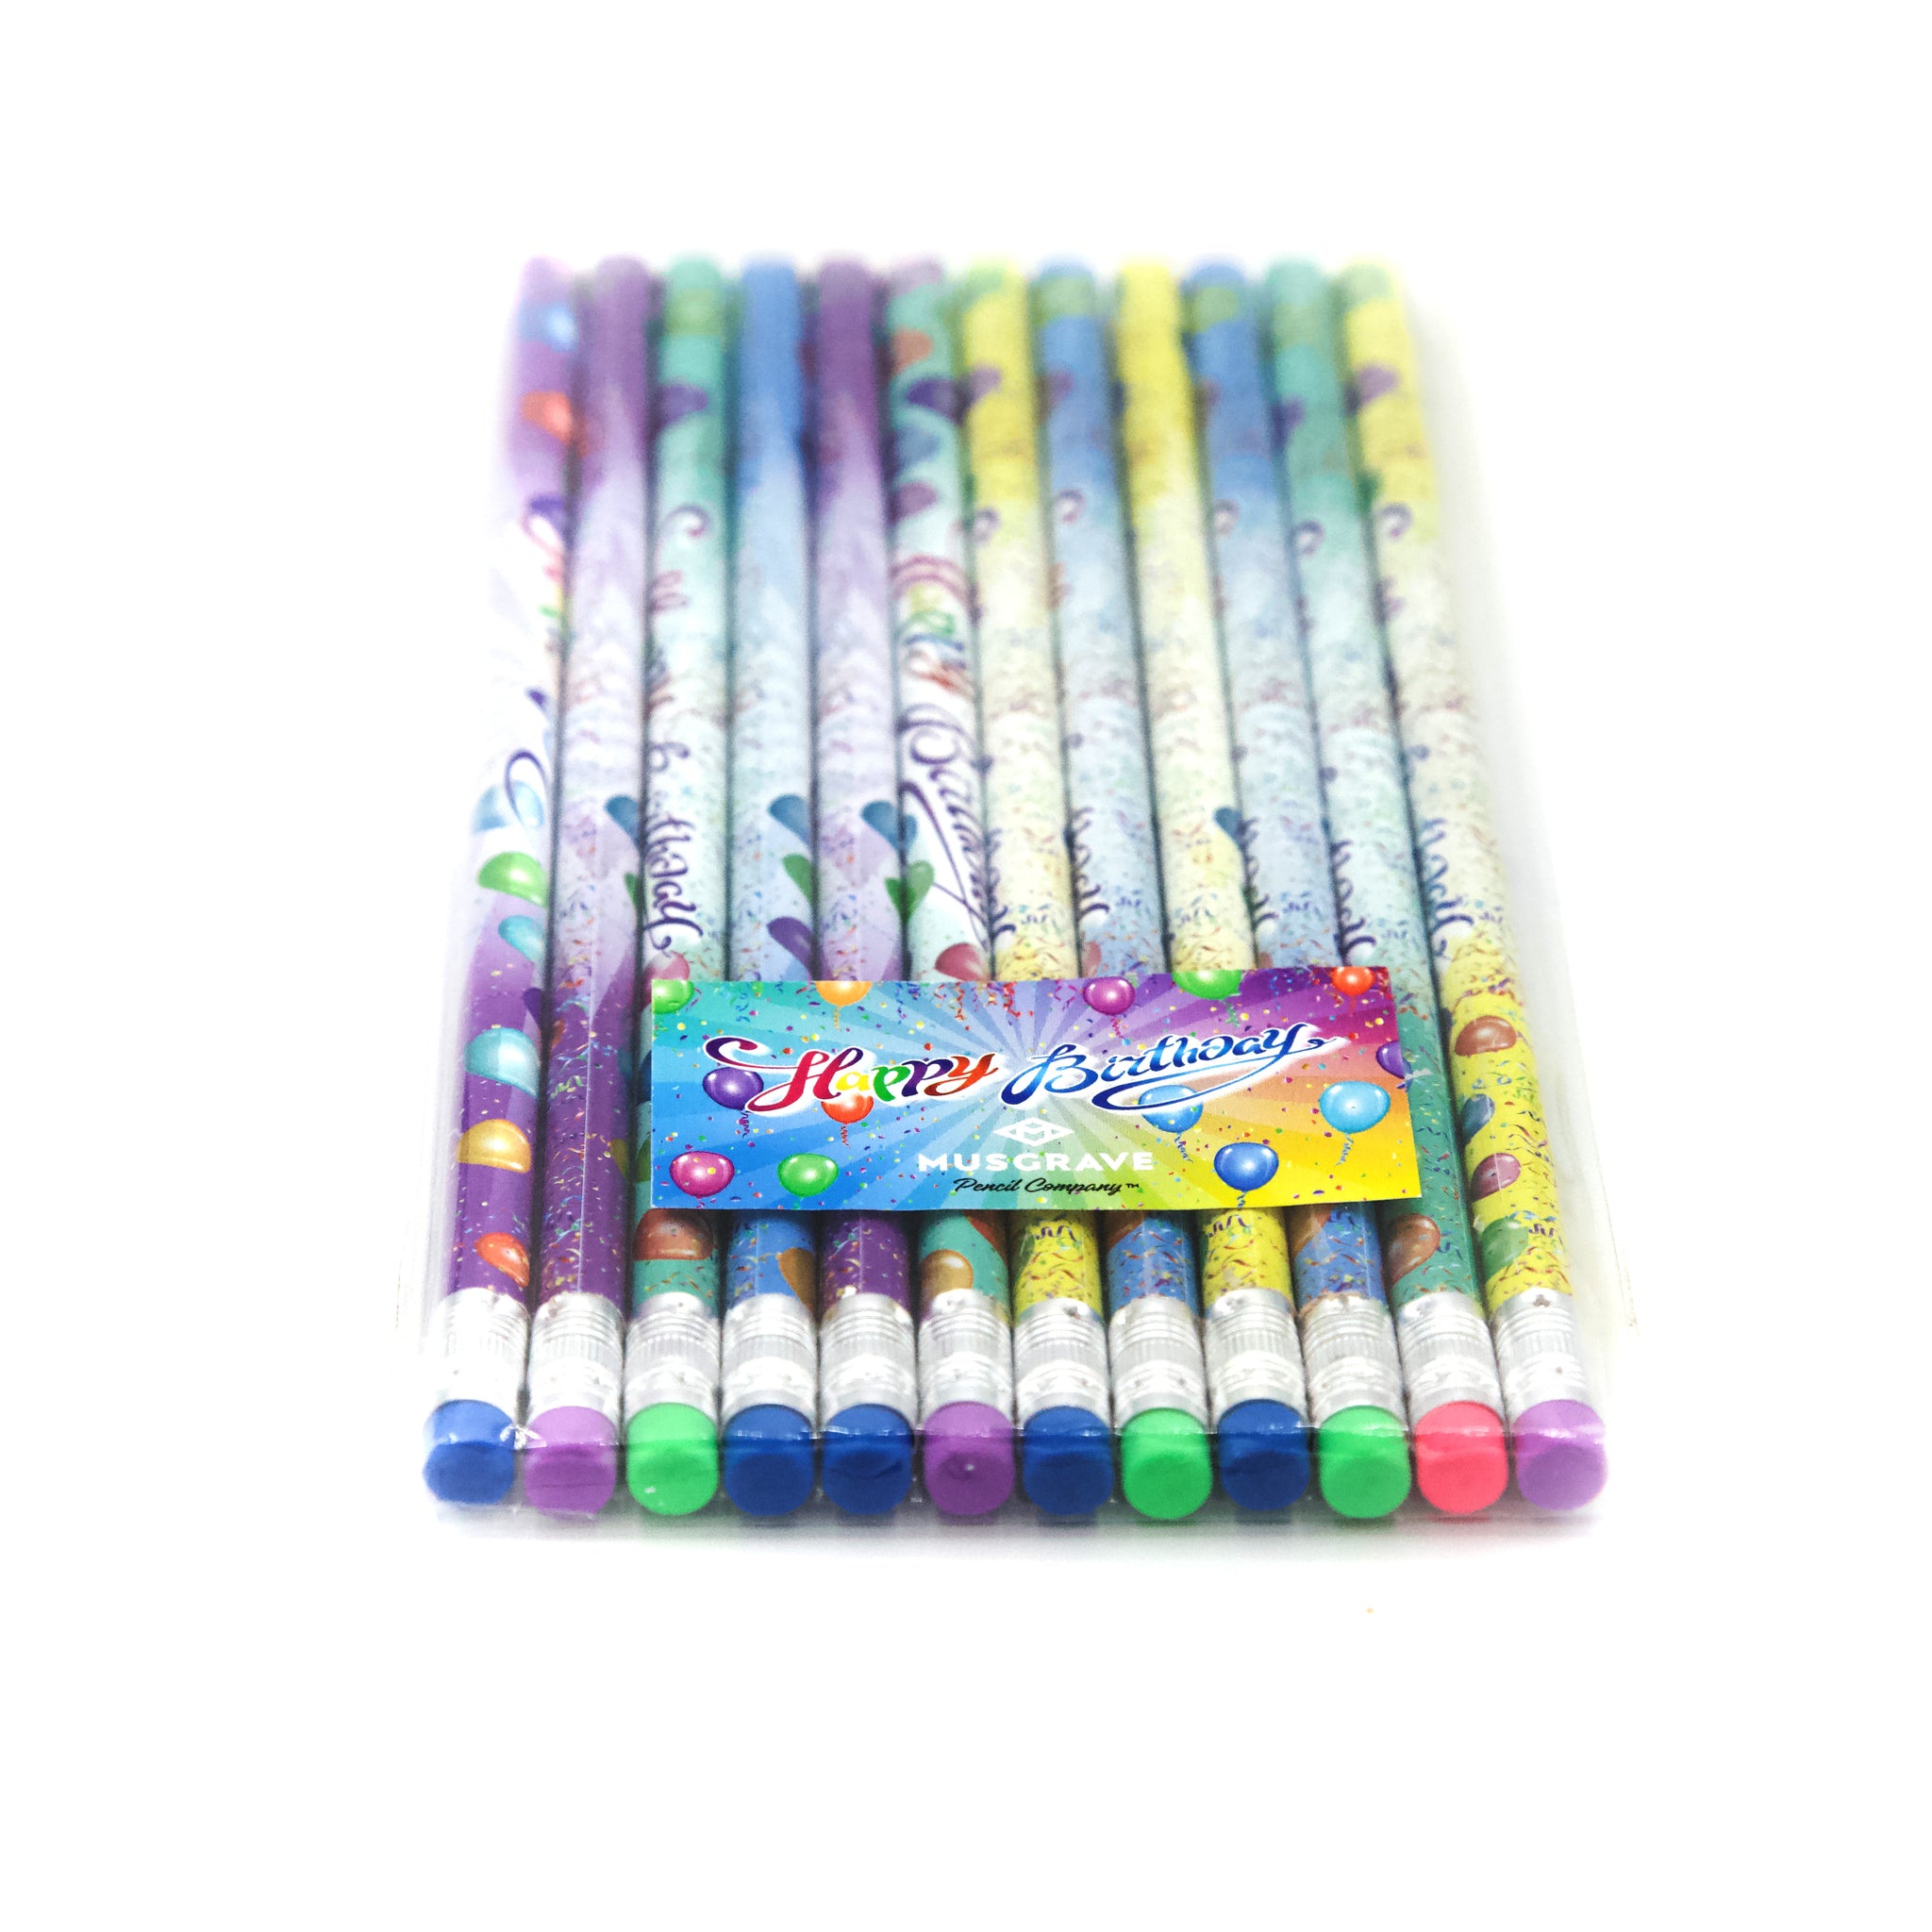 Moon Products Neon Happy Birthday Pencils #2 HB Lead 12 Per Pack 12 Packs  (JRM7917B-12), 1 - Kroger